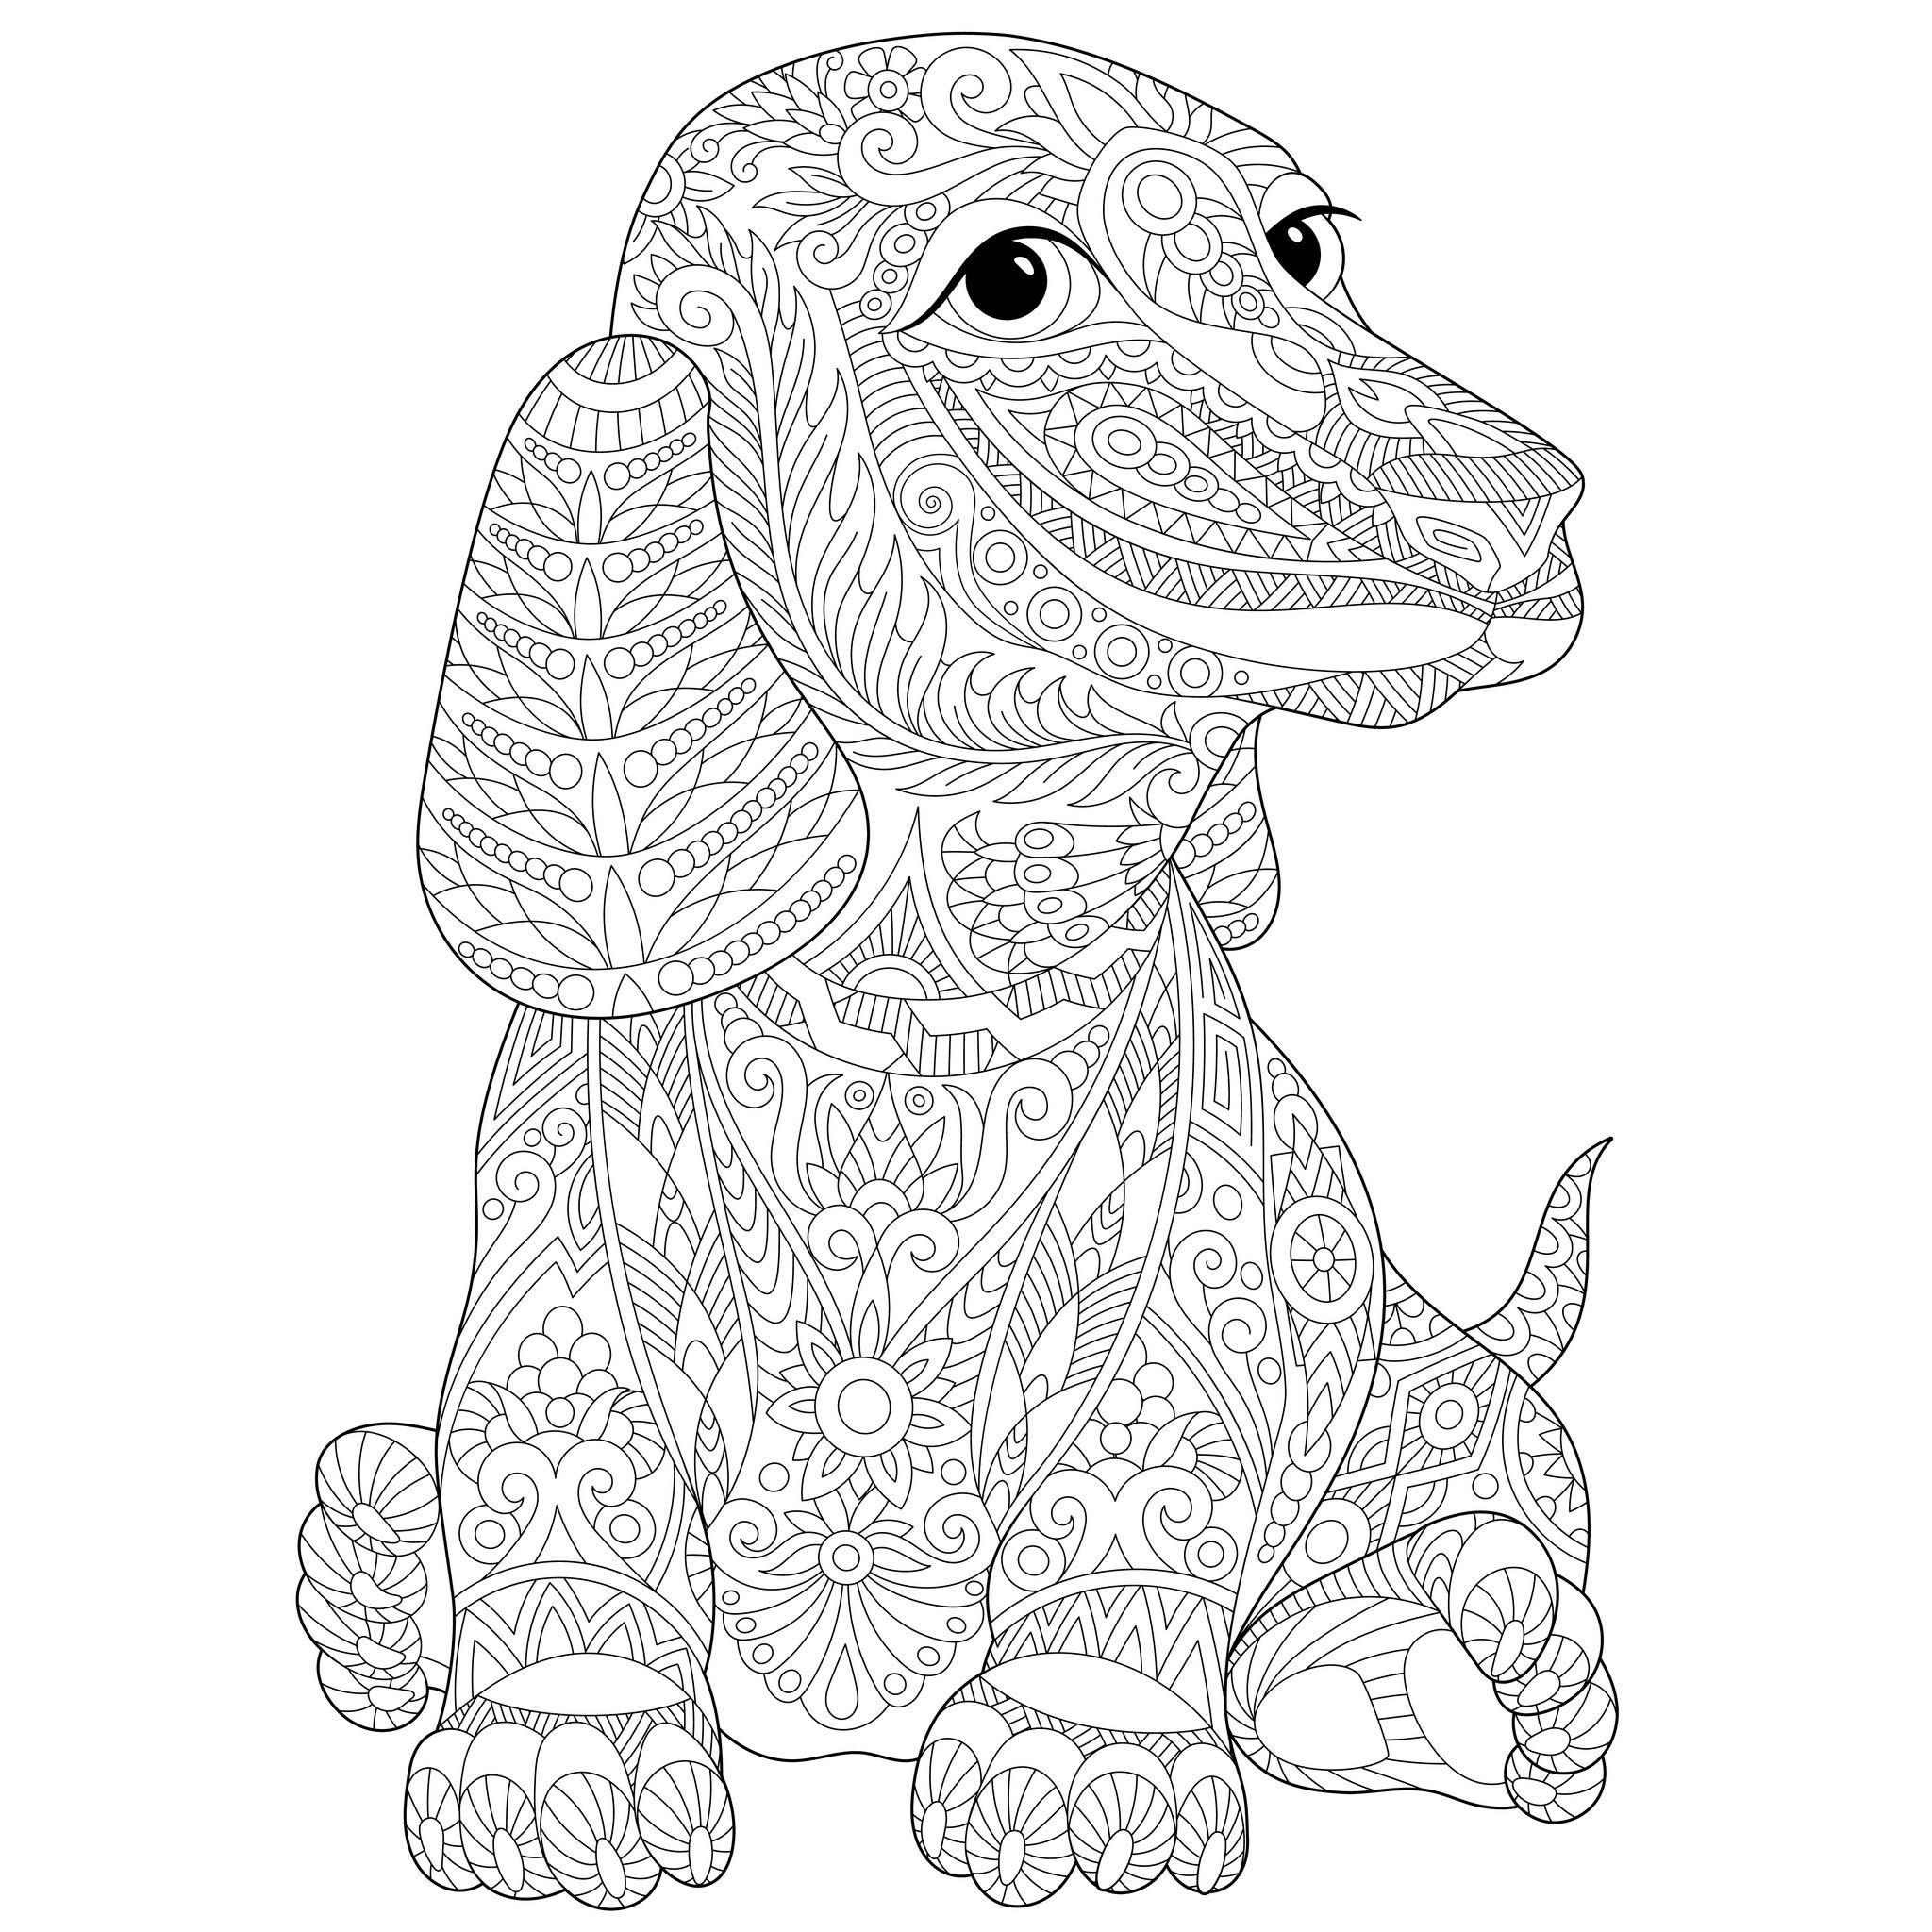 Dachshund dog with complex patterns, Artist : Sybirko   Source : 123rf